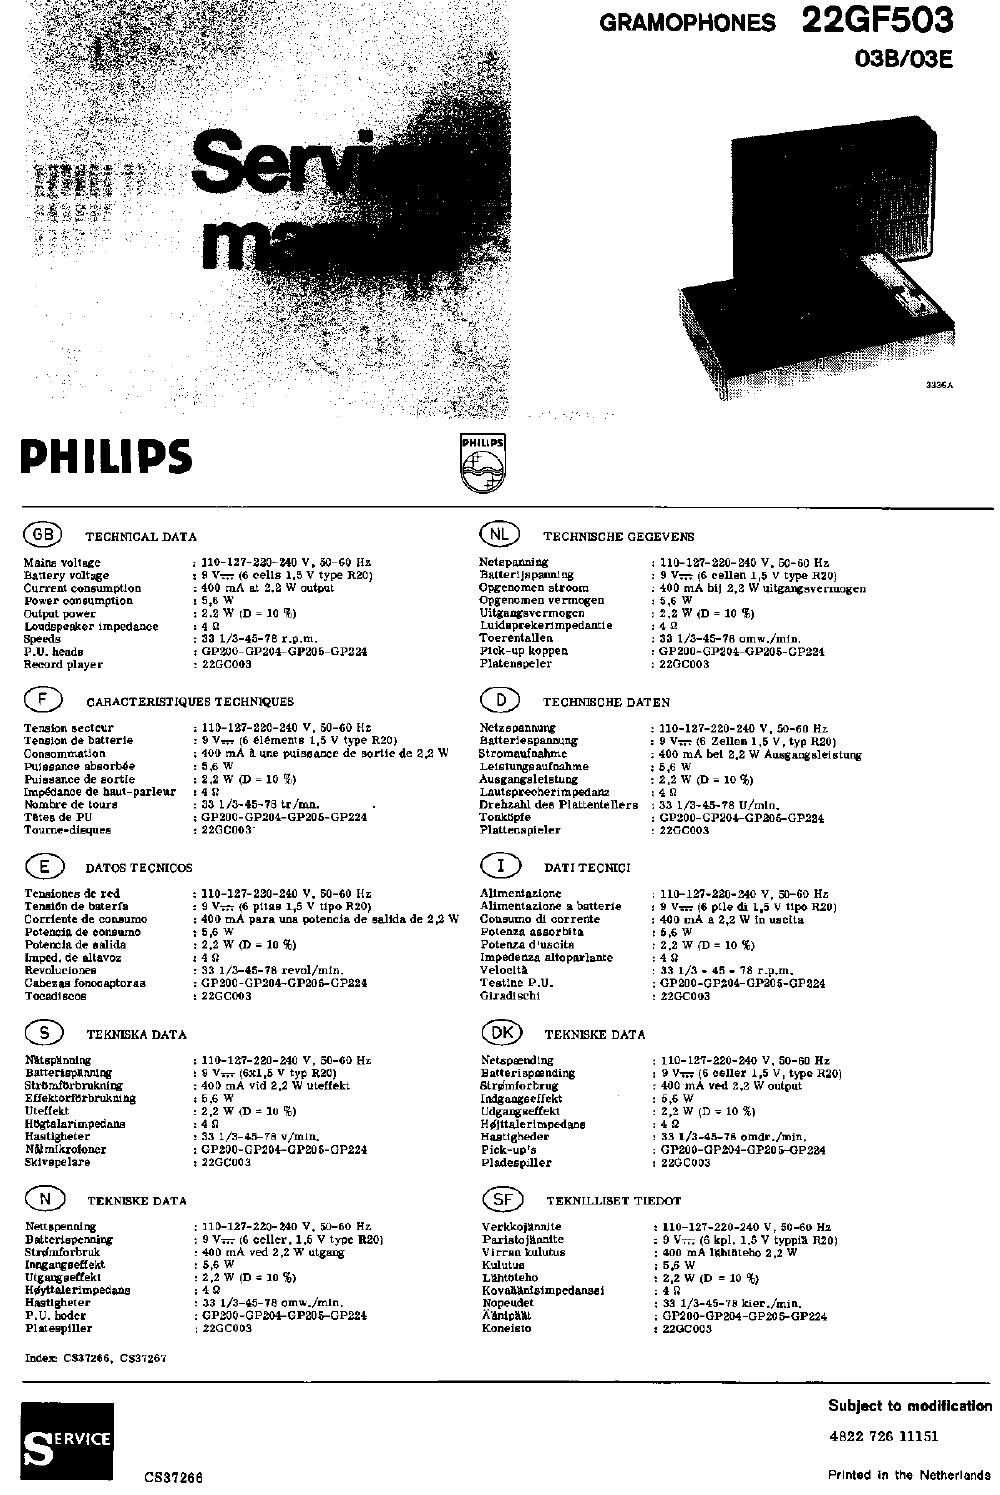 philips 22 gf 503 service manual